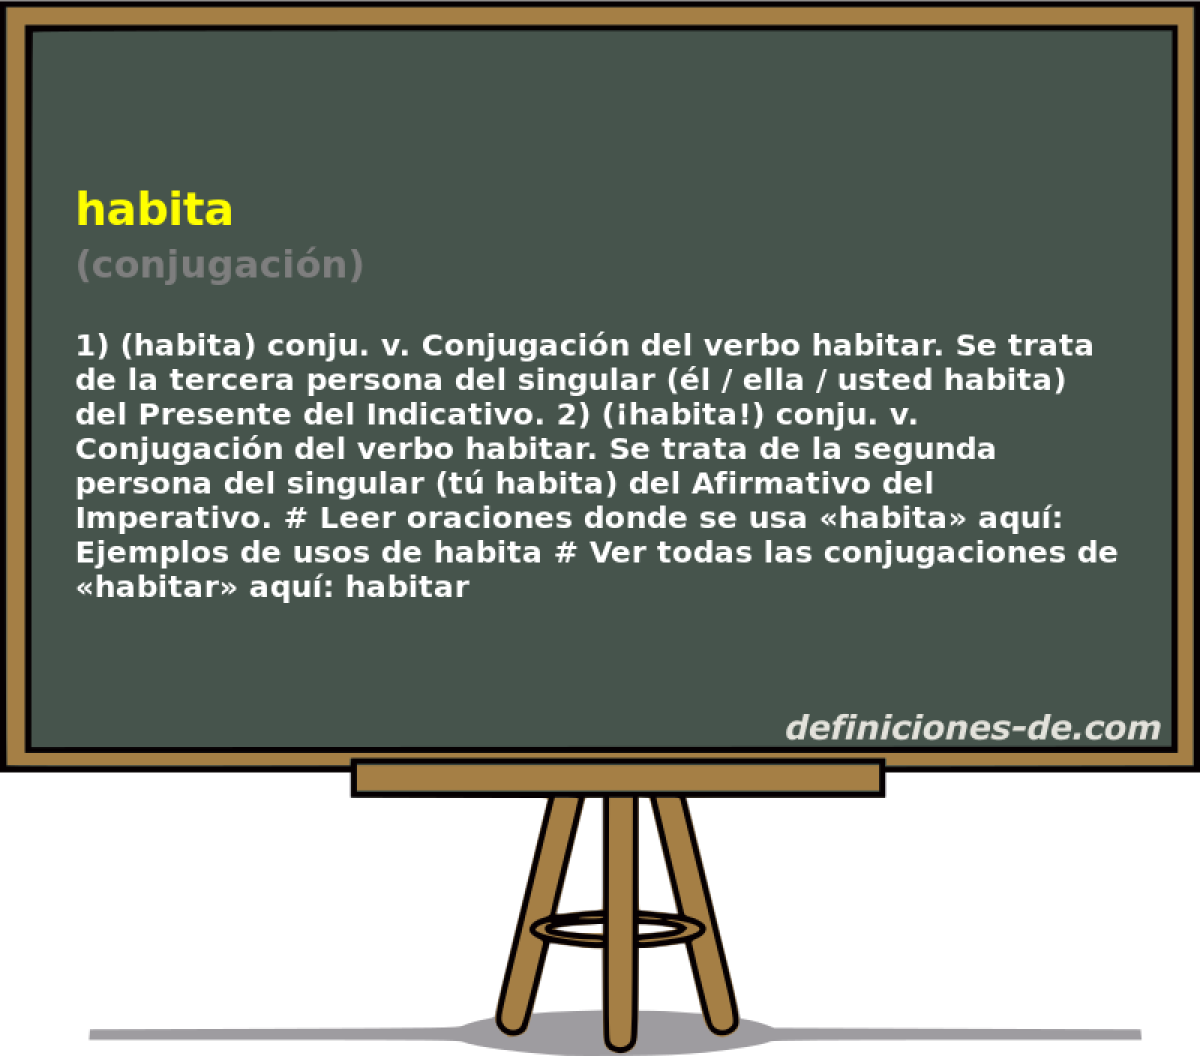 habita (conjugacin)